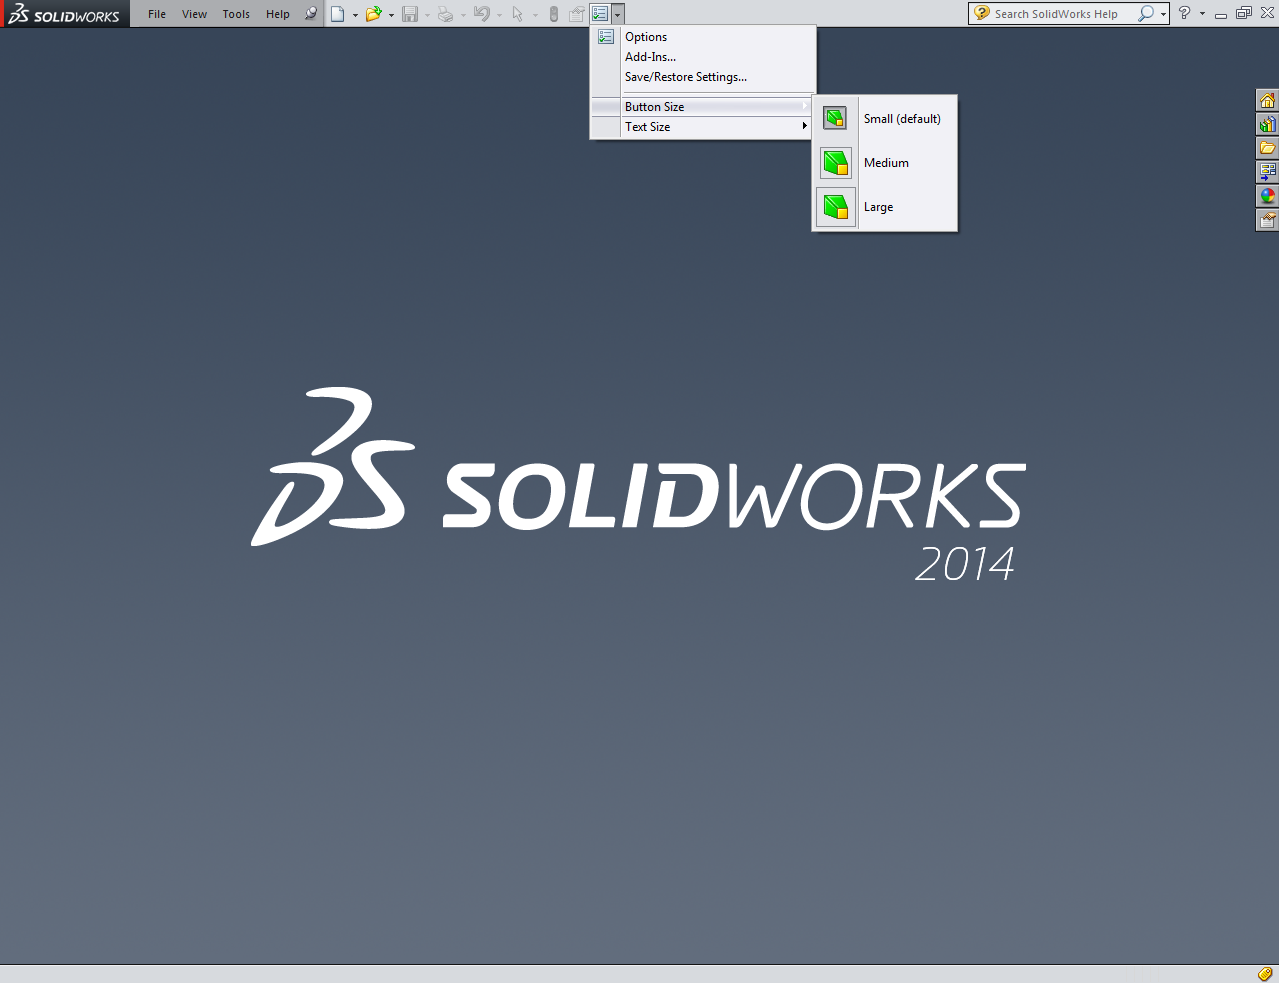 download solidworks 2014 64 bit full